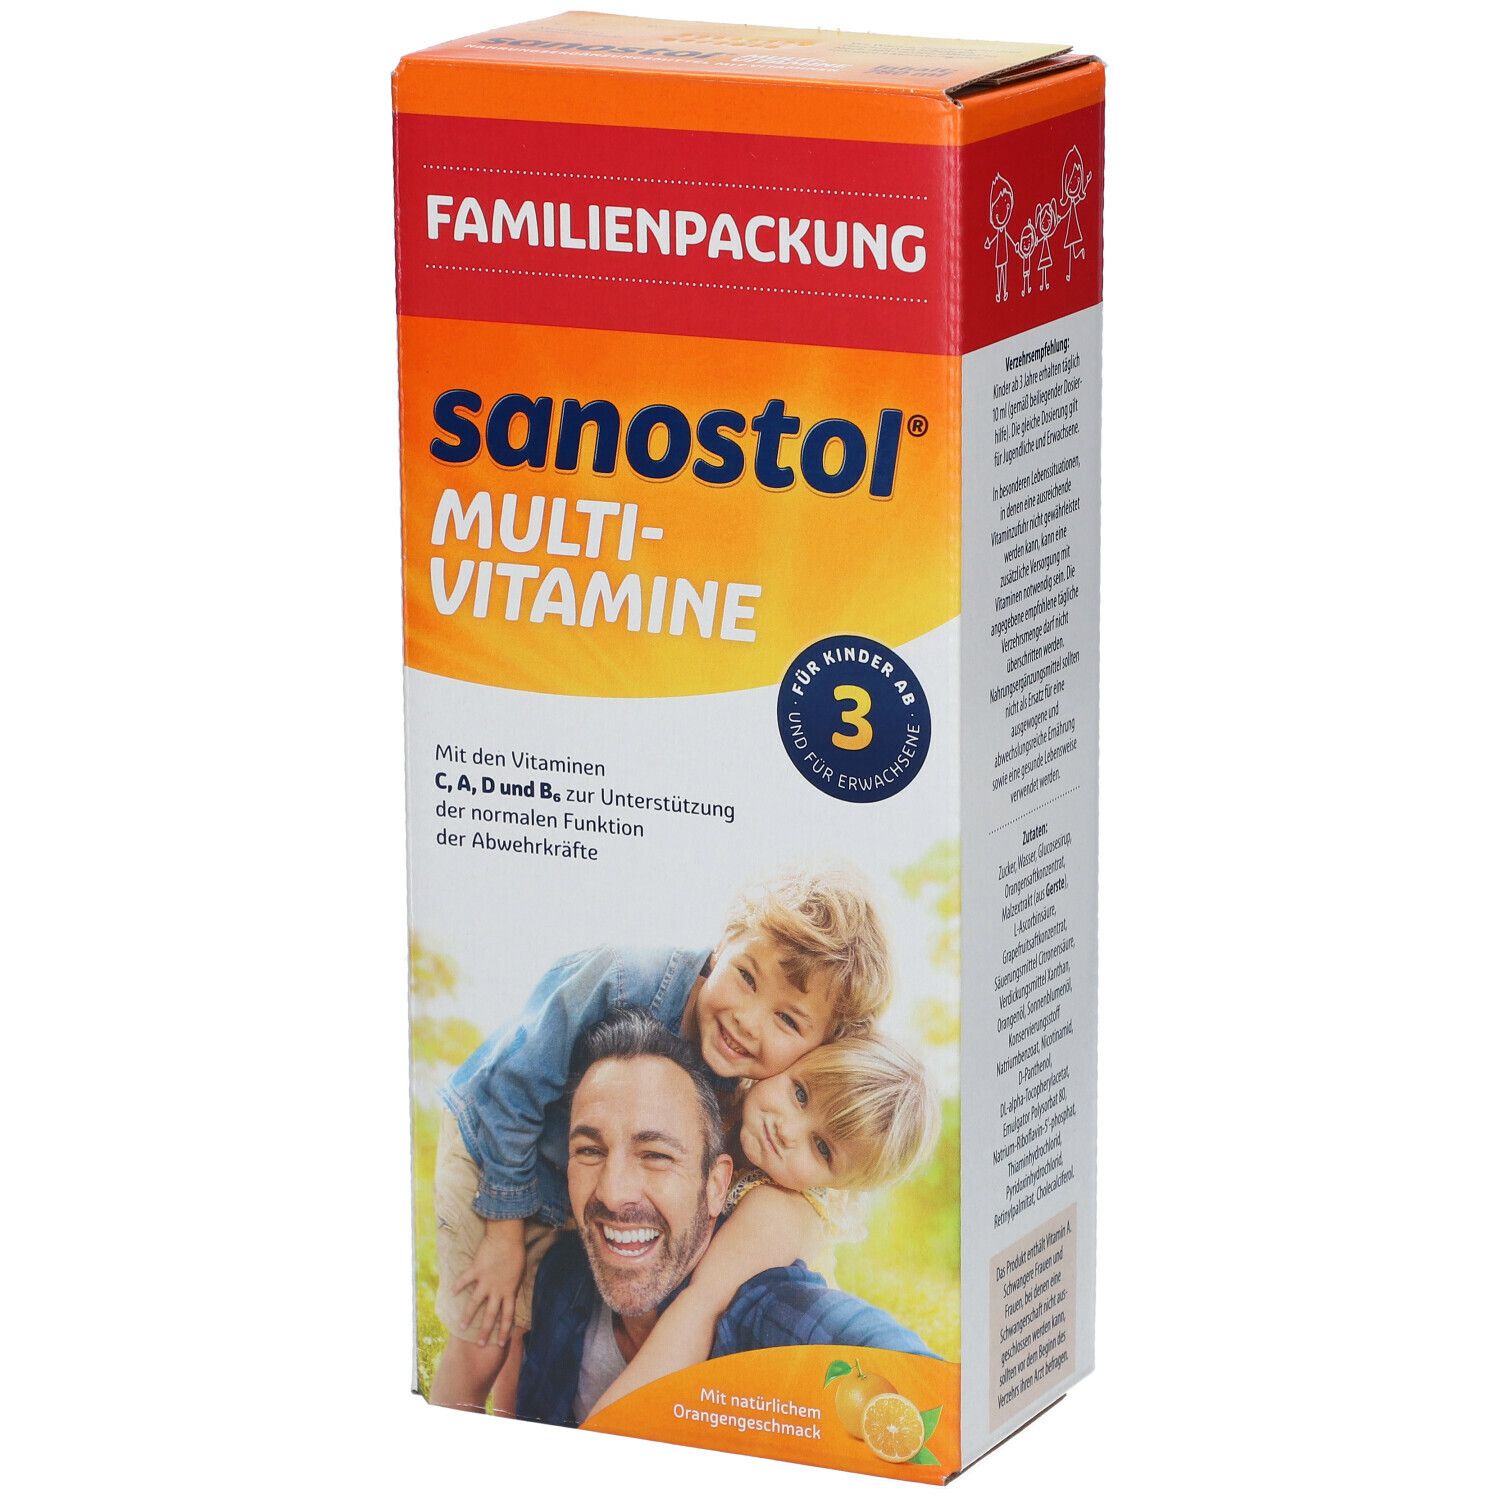 sanostol® Multi-Vitamine